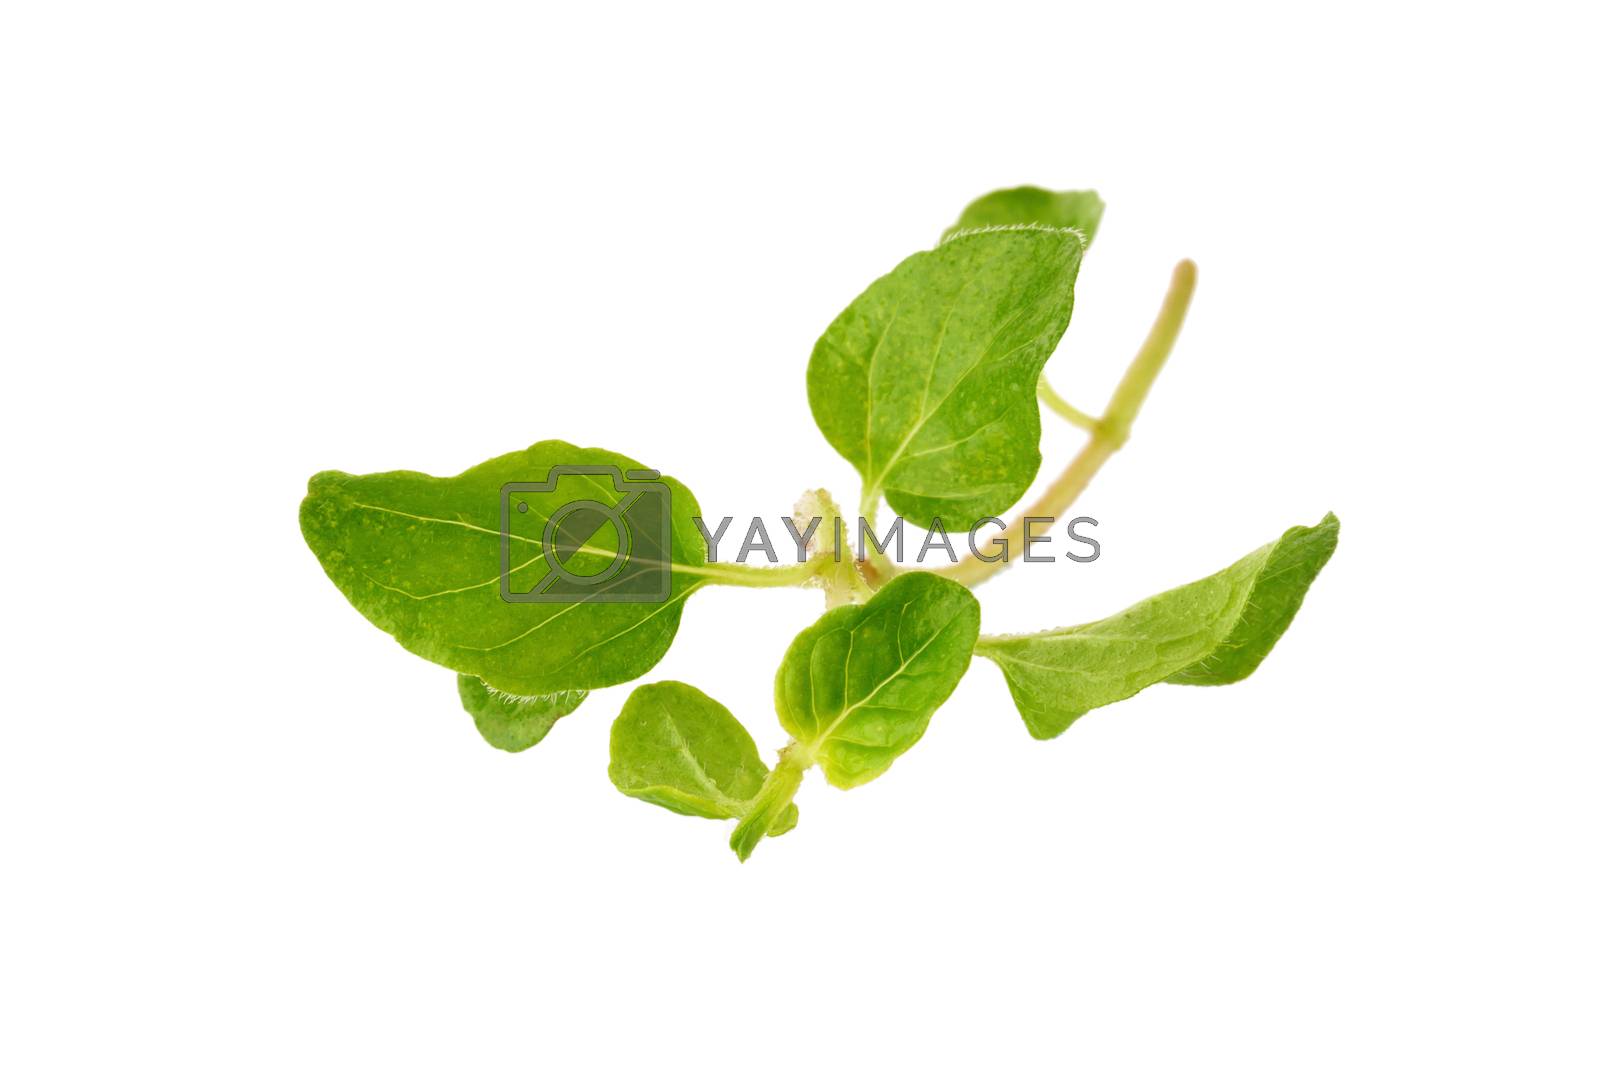 Royalty free image of Fresh Oregano herb on a white background by kaiskynet